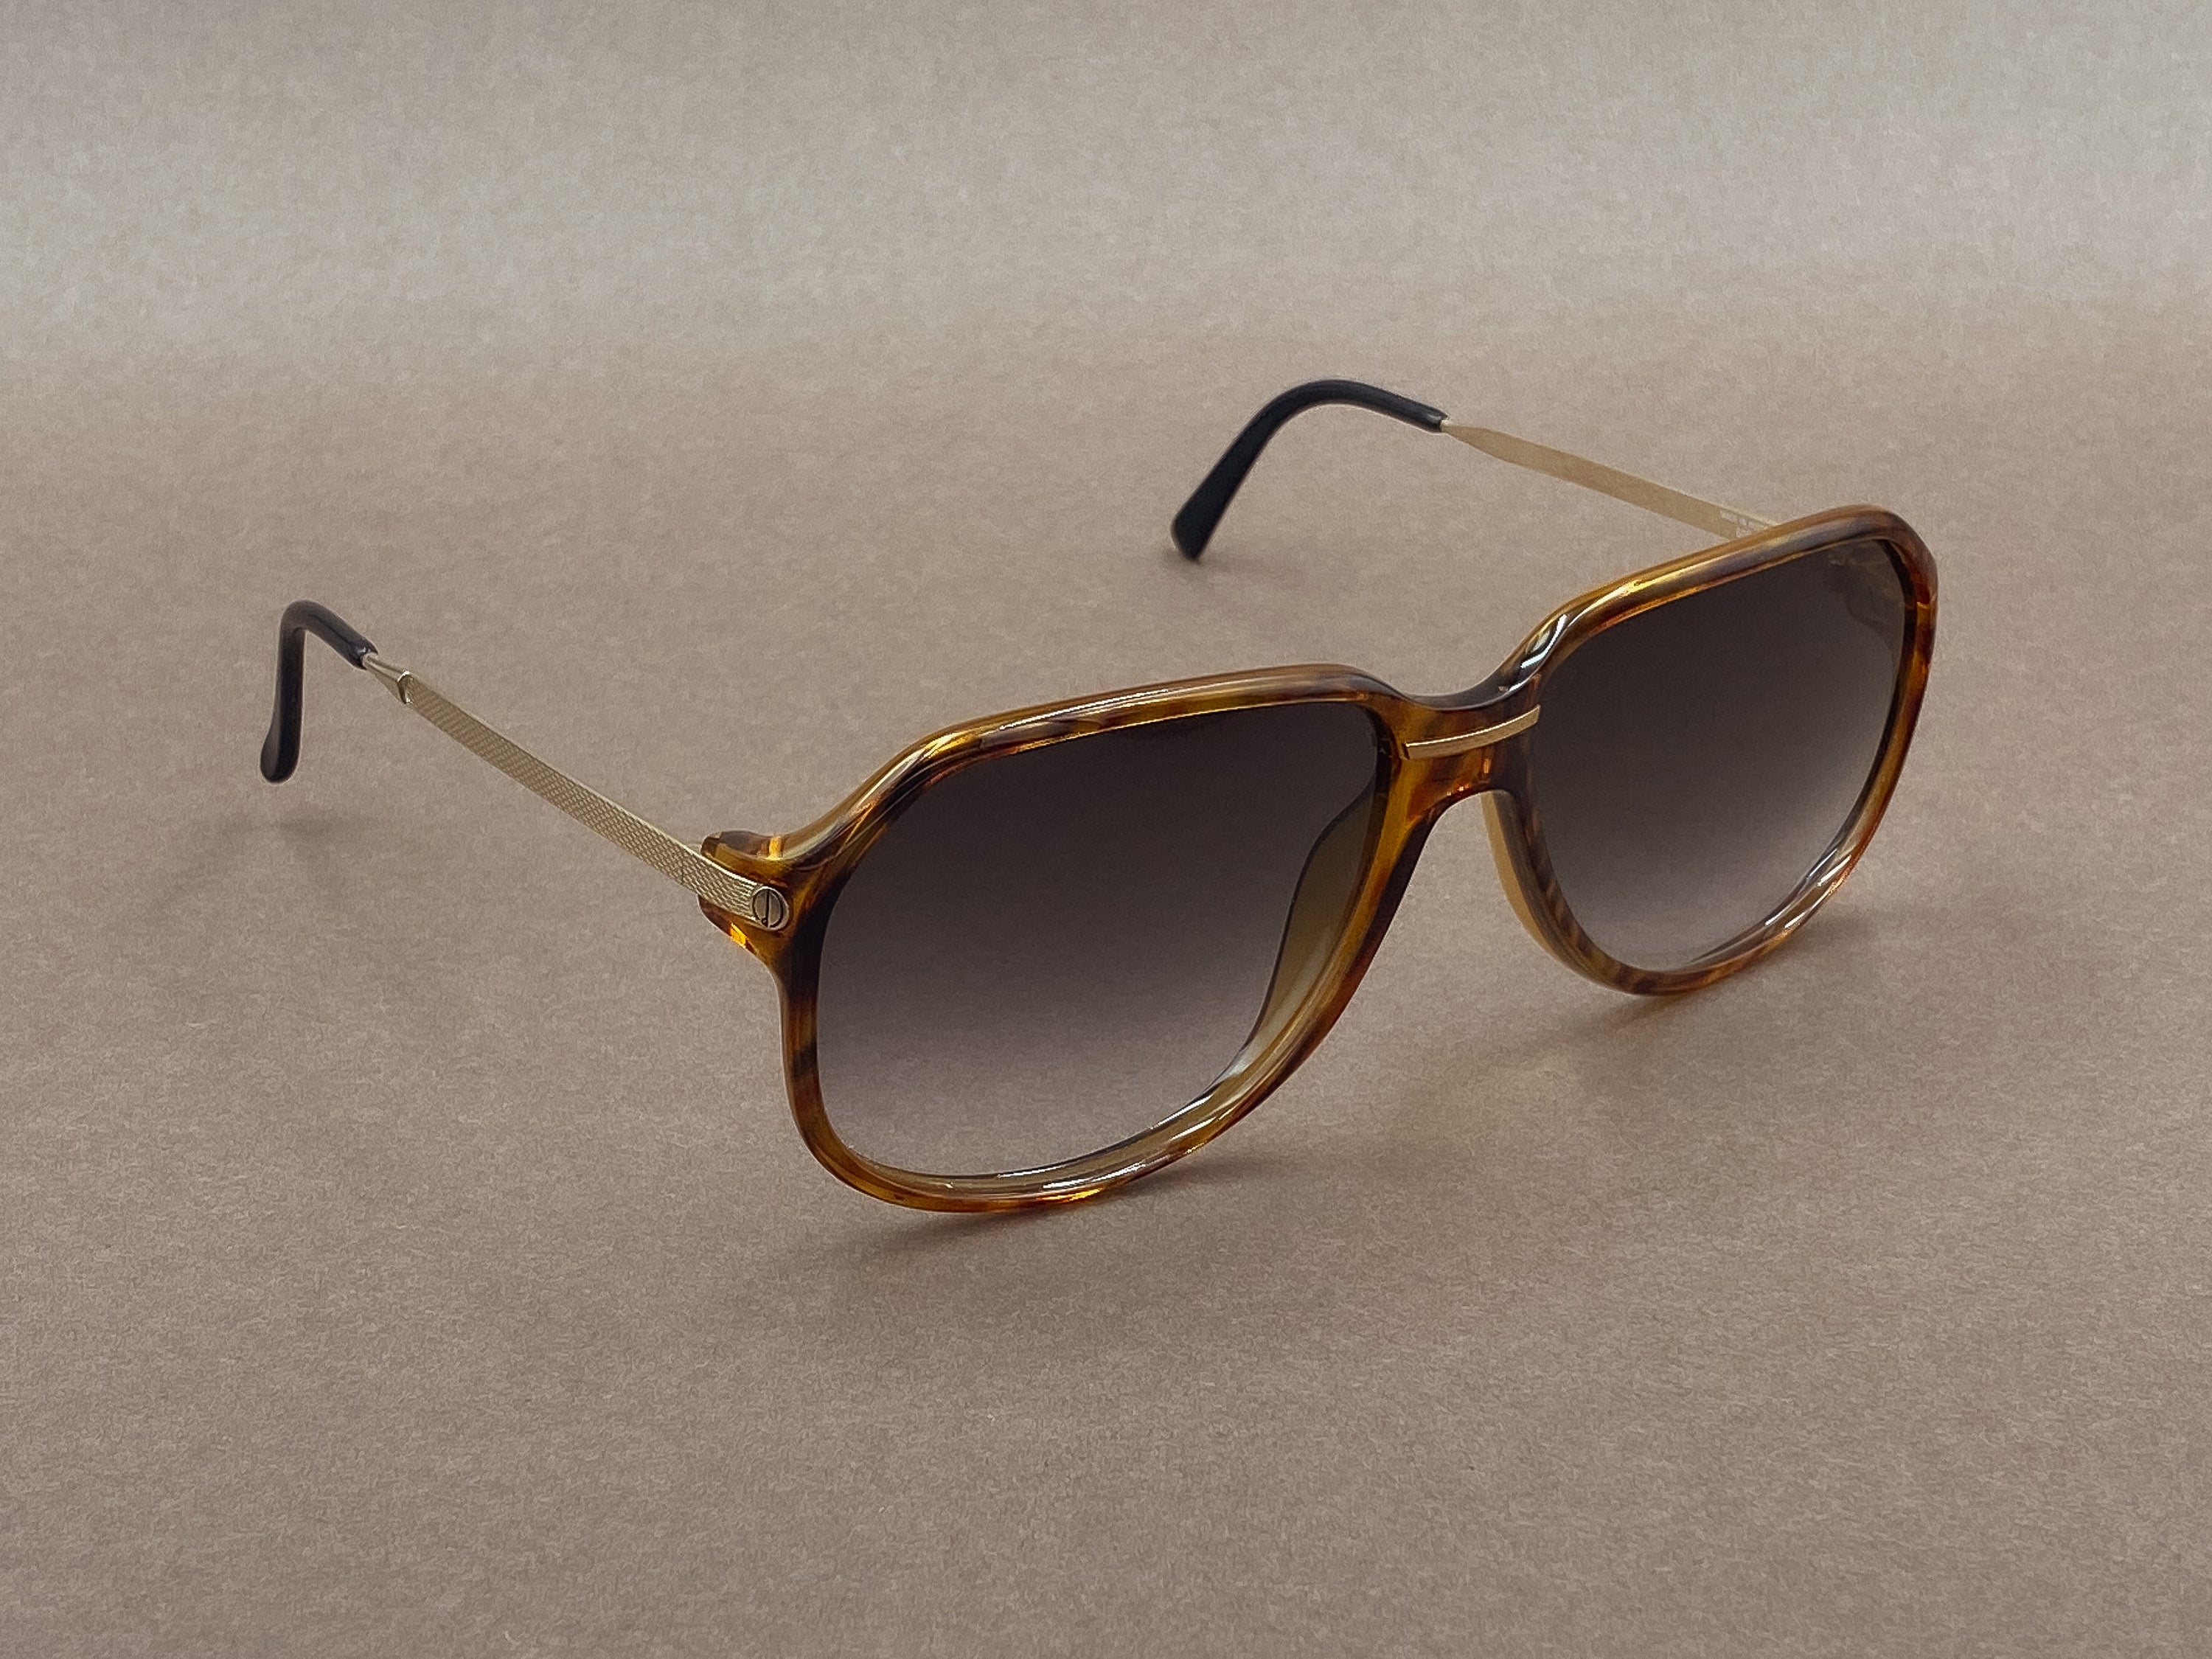 Dunhill 6132 sunglasses